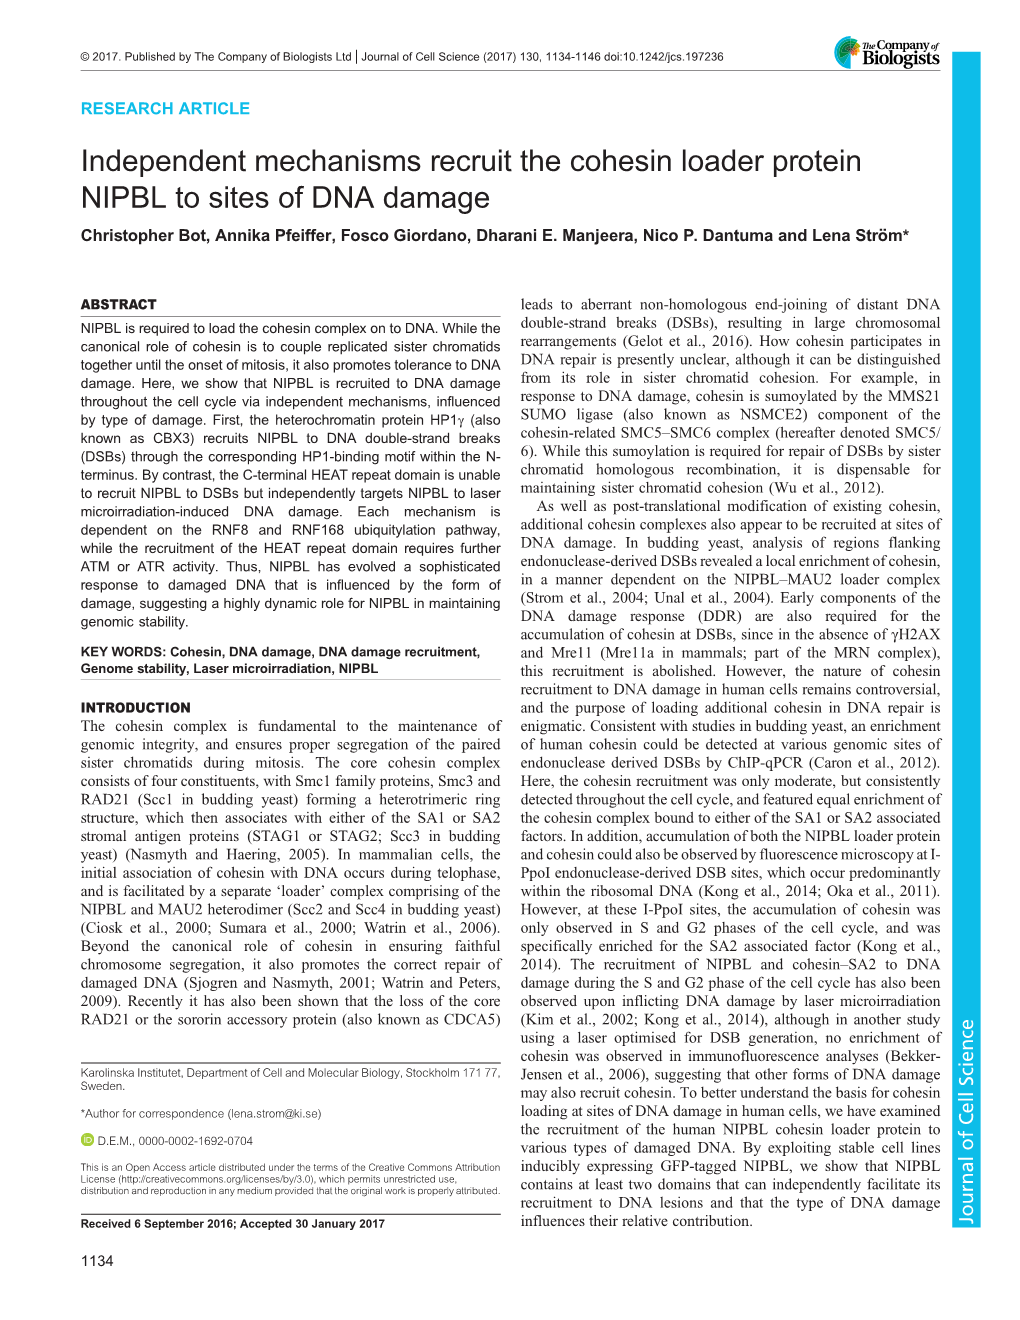 Independent Mechanisms Recruit the Cohesin Loader Protein NIPBL to Sites of DNA Damage Christopher Bot, Annika Pfeiffer, Fosco Giordano, Dharani E